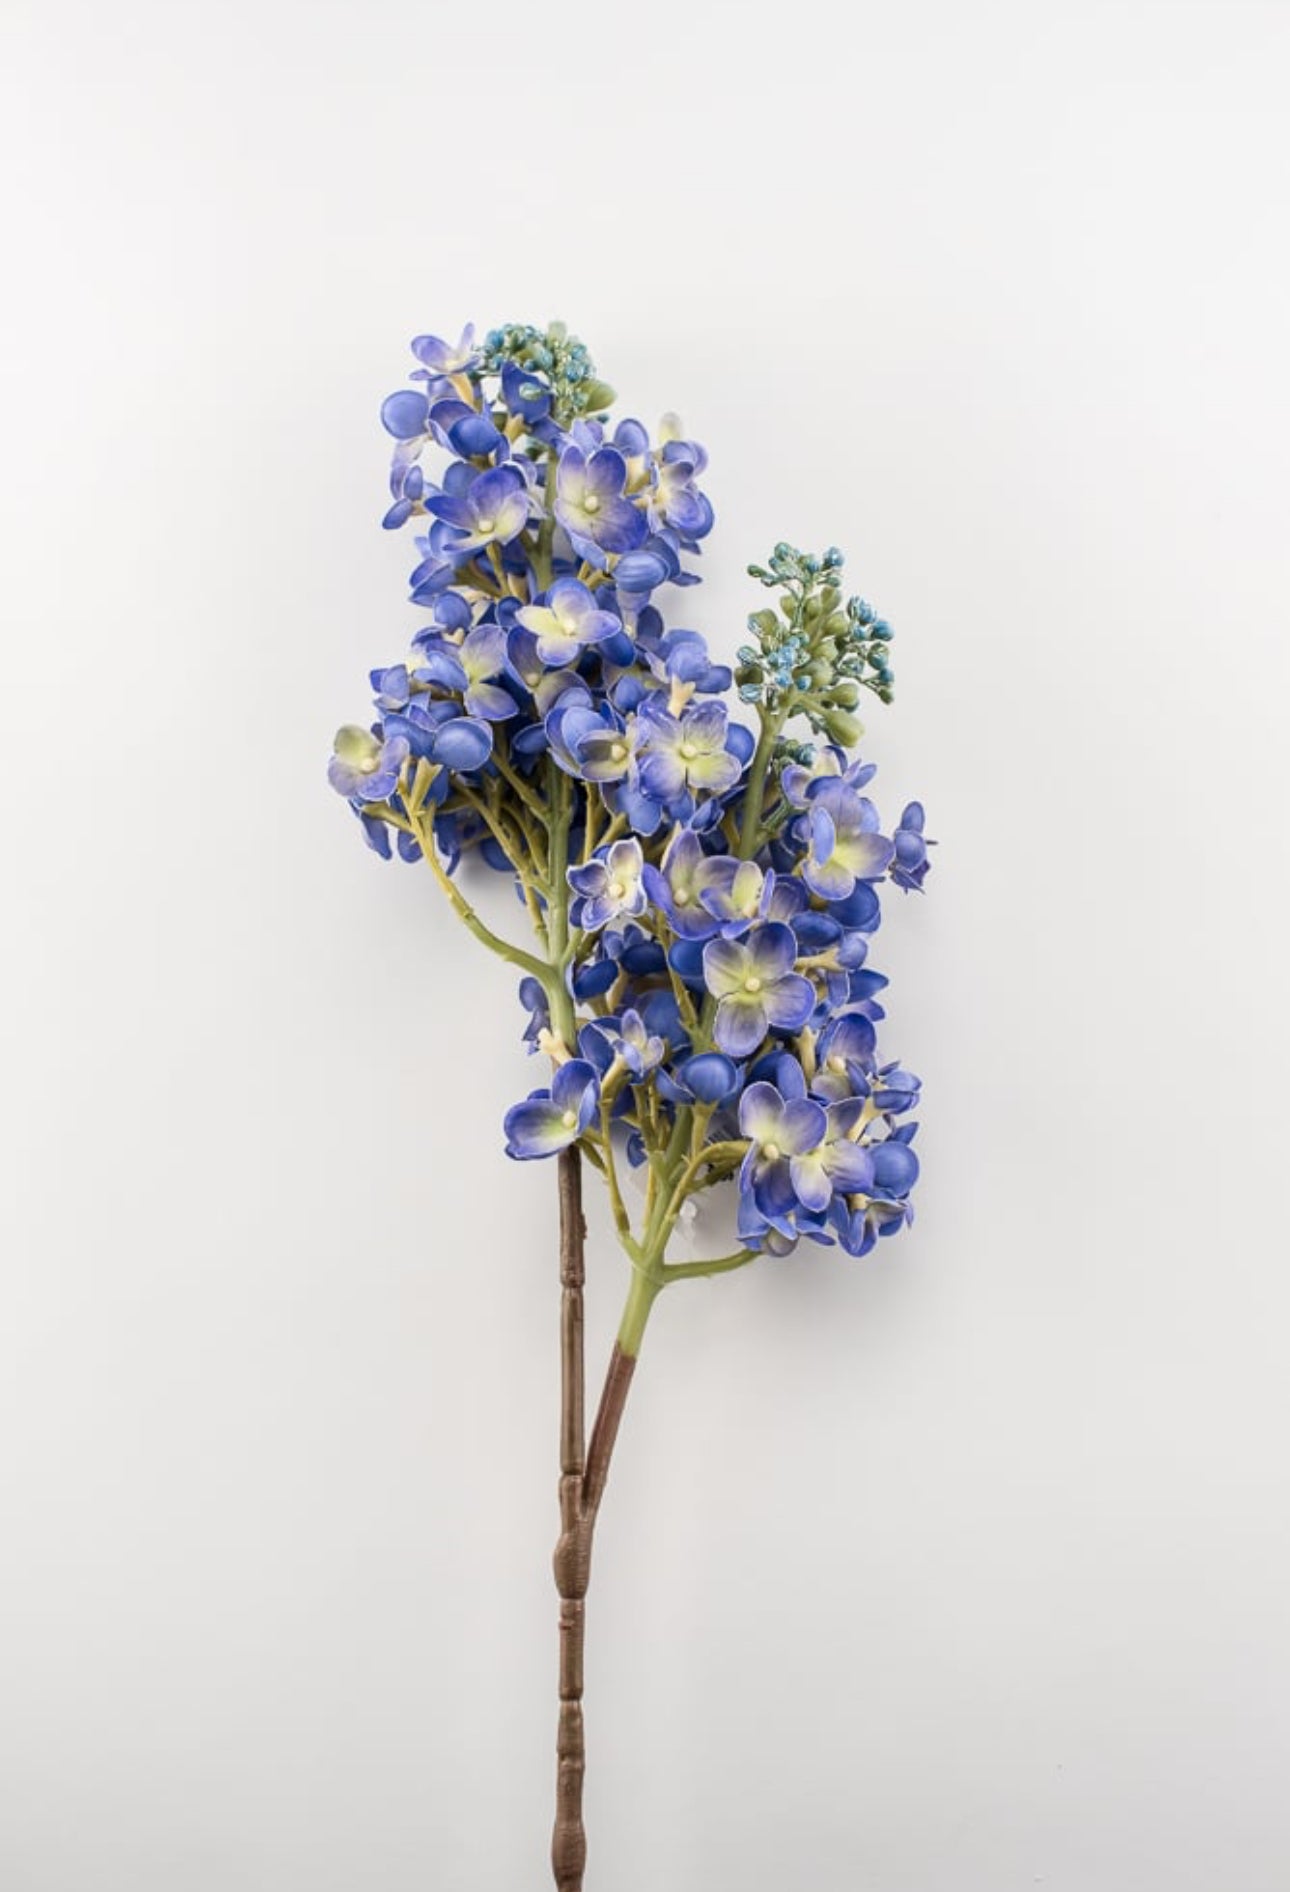 Lilac spray - blue - Greenery Market6174-B